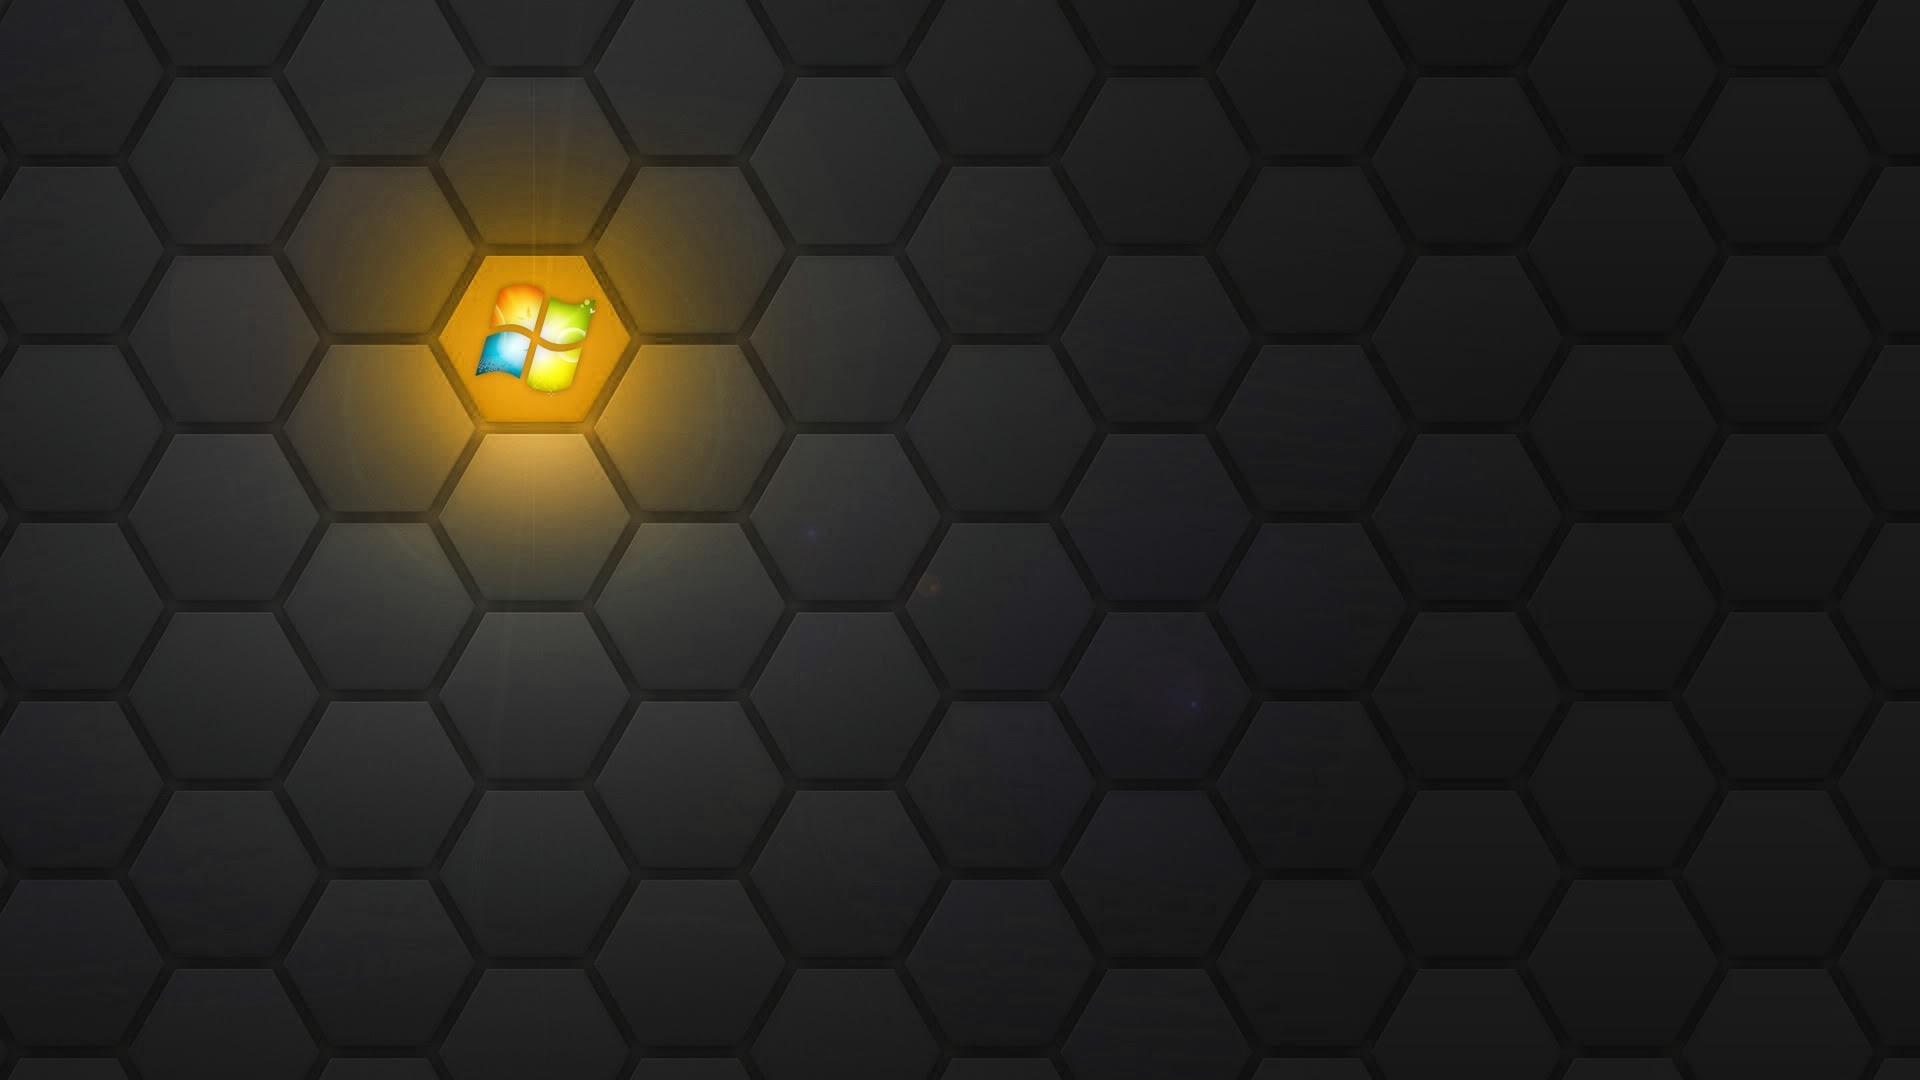 1920x1080 Windows Logo in a Honeycomb Pattern Wallpaper